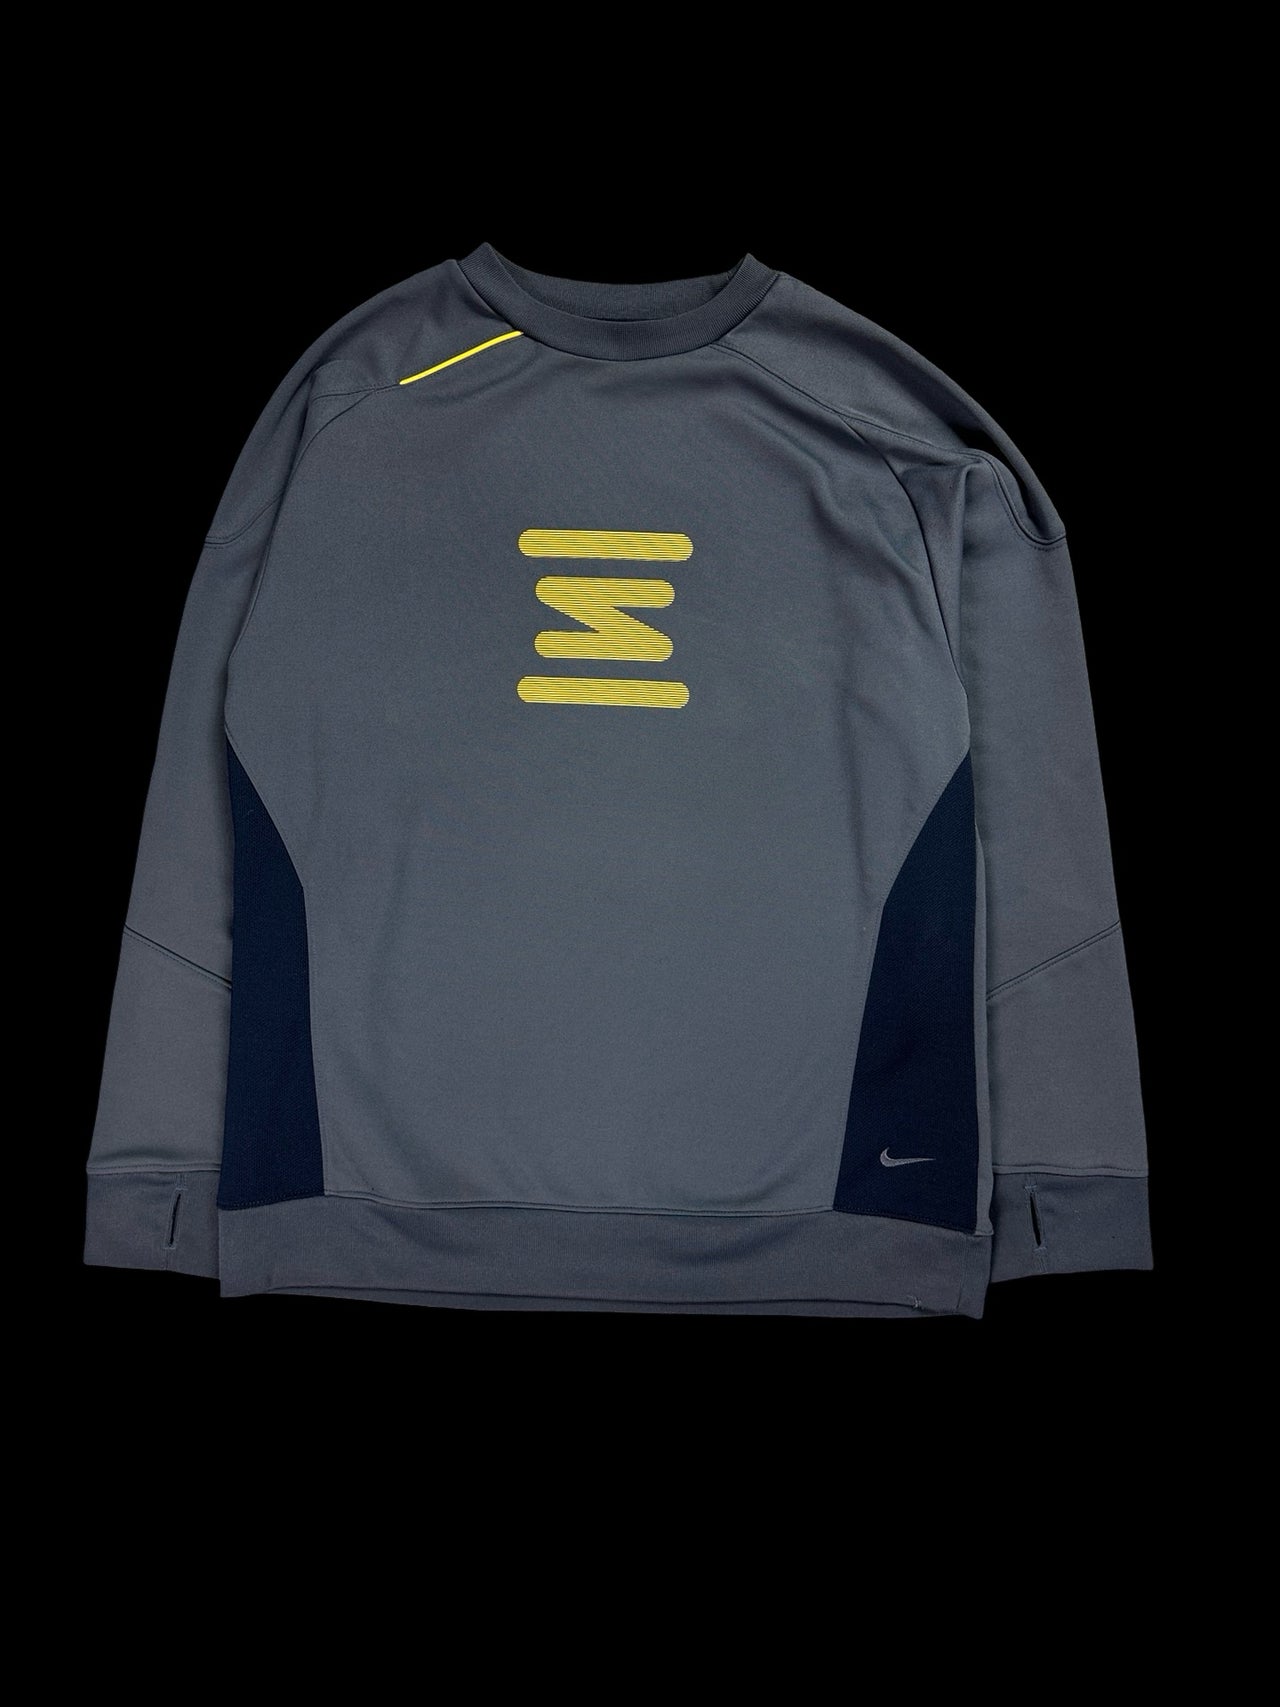 Nike Shox Sweater (S)